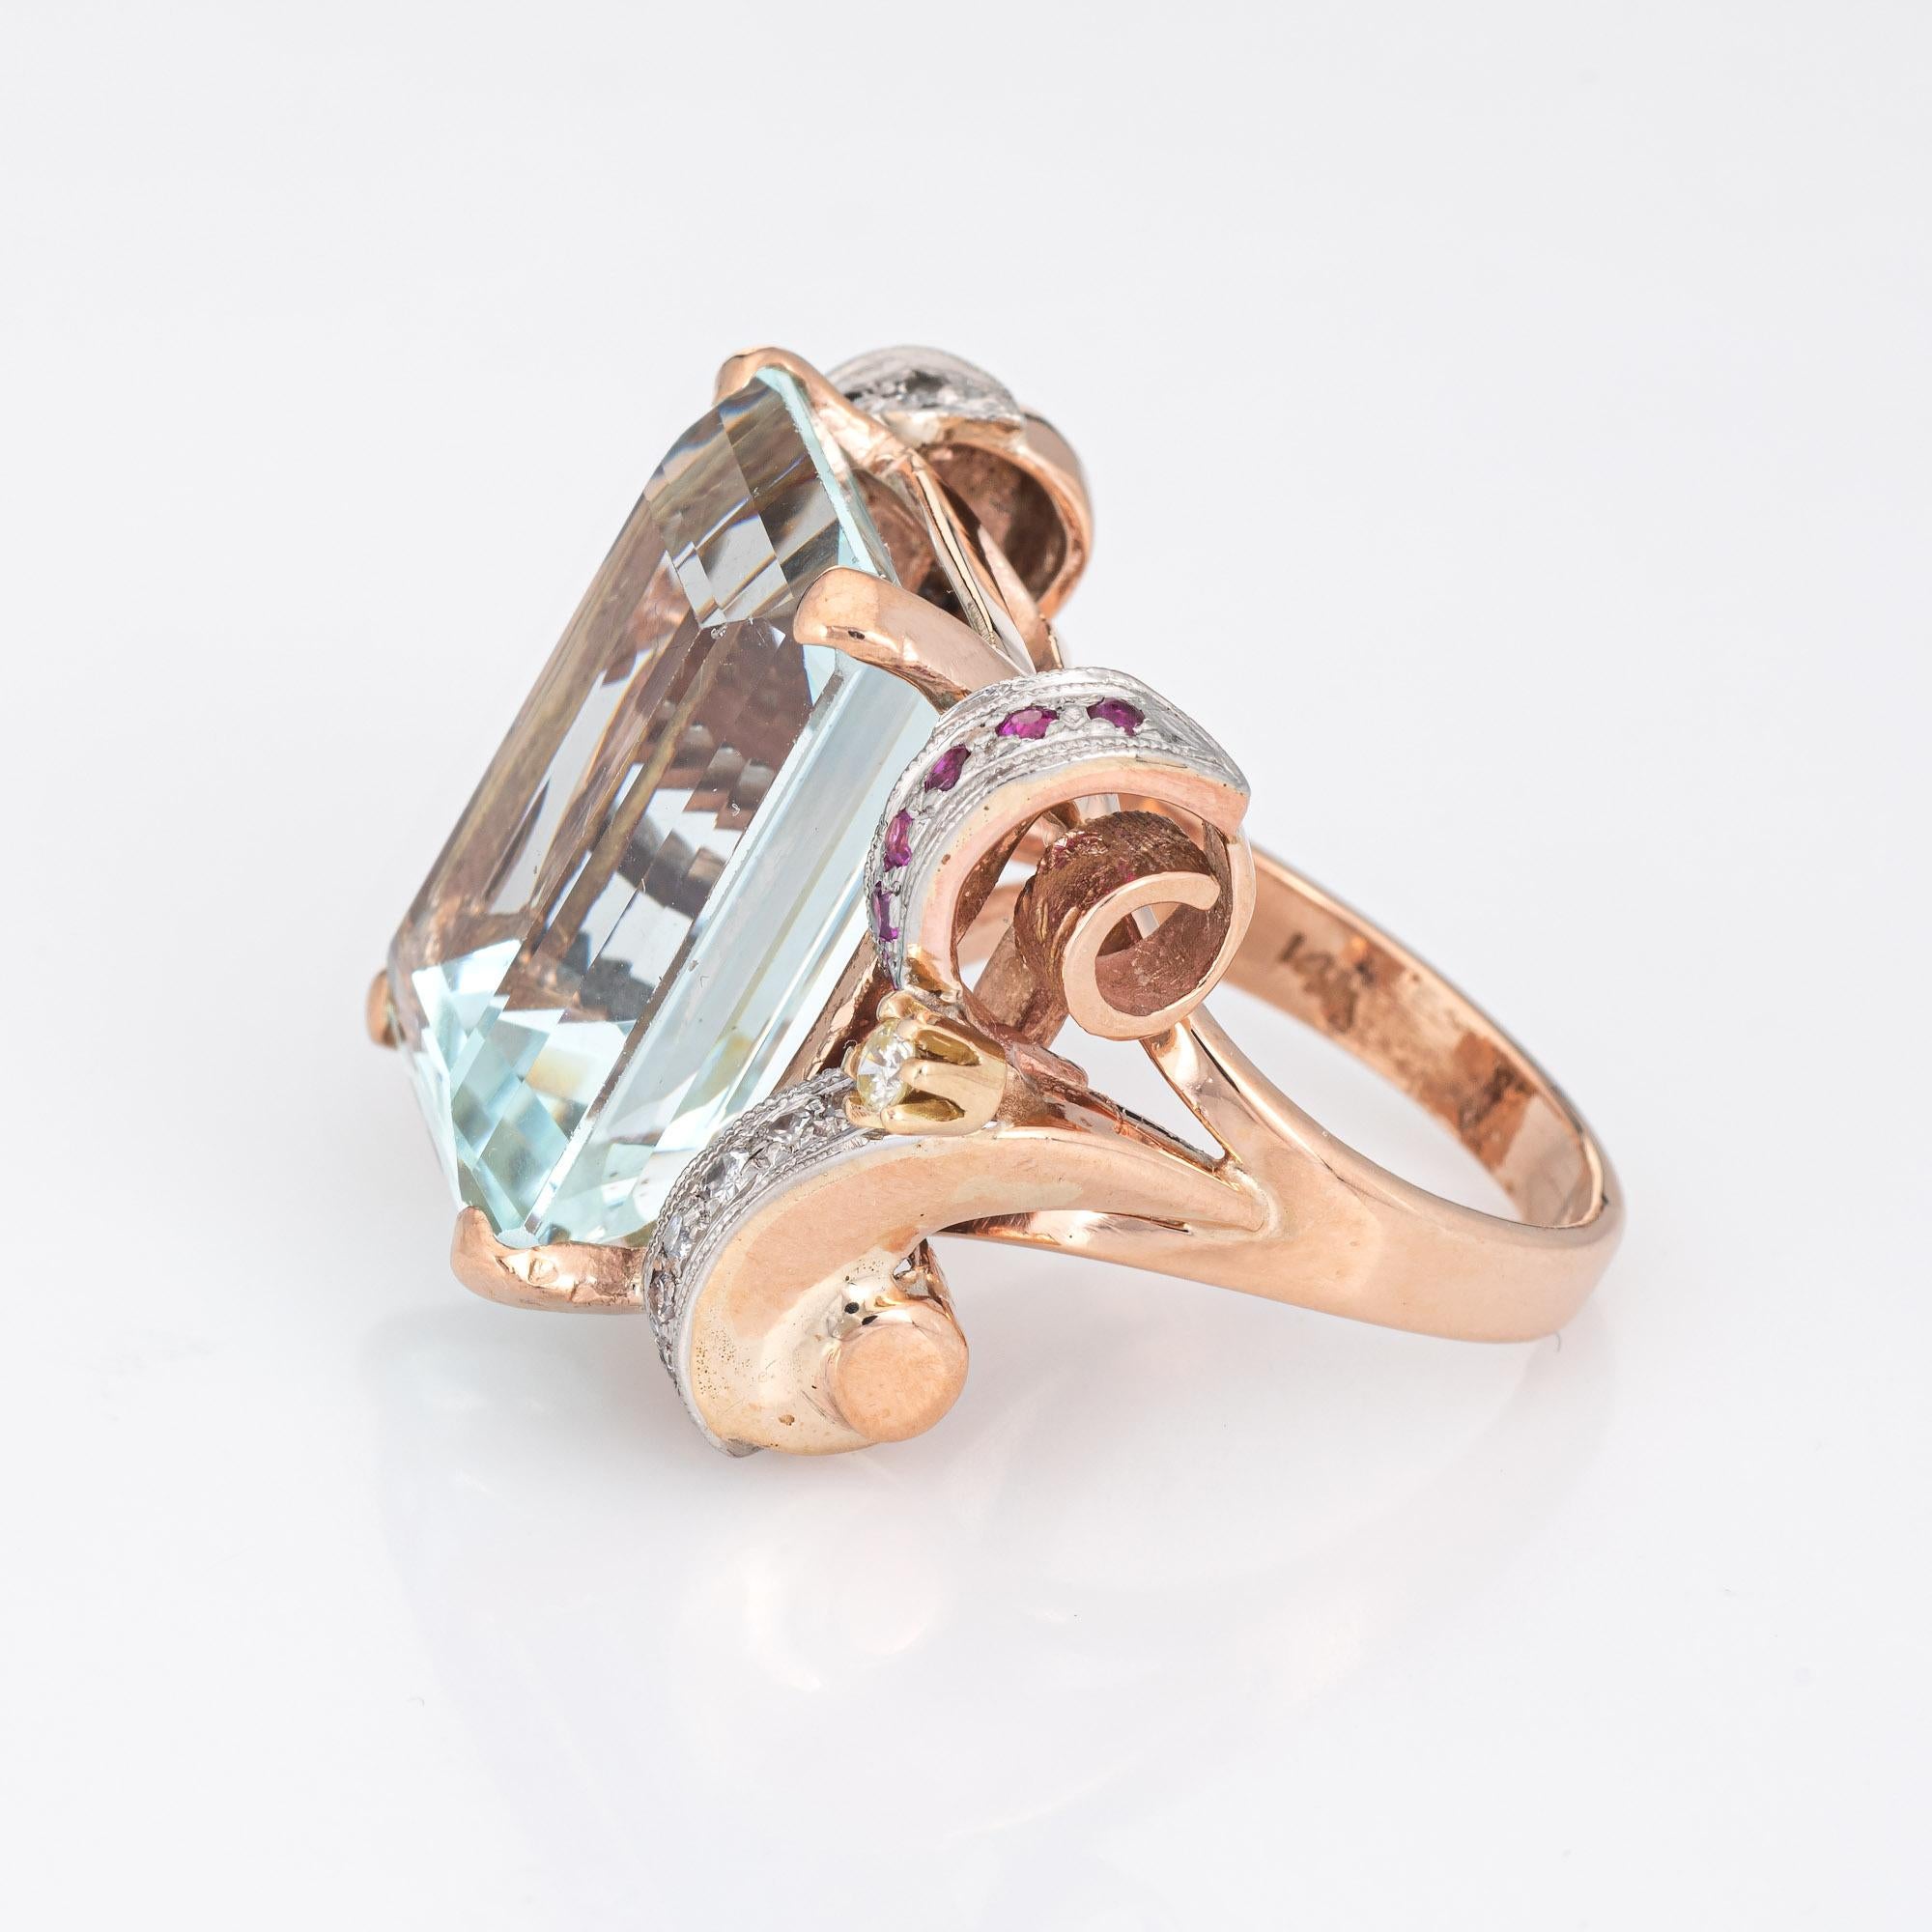 Emerald Cut Retro 22 Ct Aquamarine Gemstone Ring Diamond 14k Rose Gold Fine Cocktail Jewelry